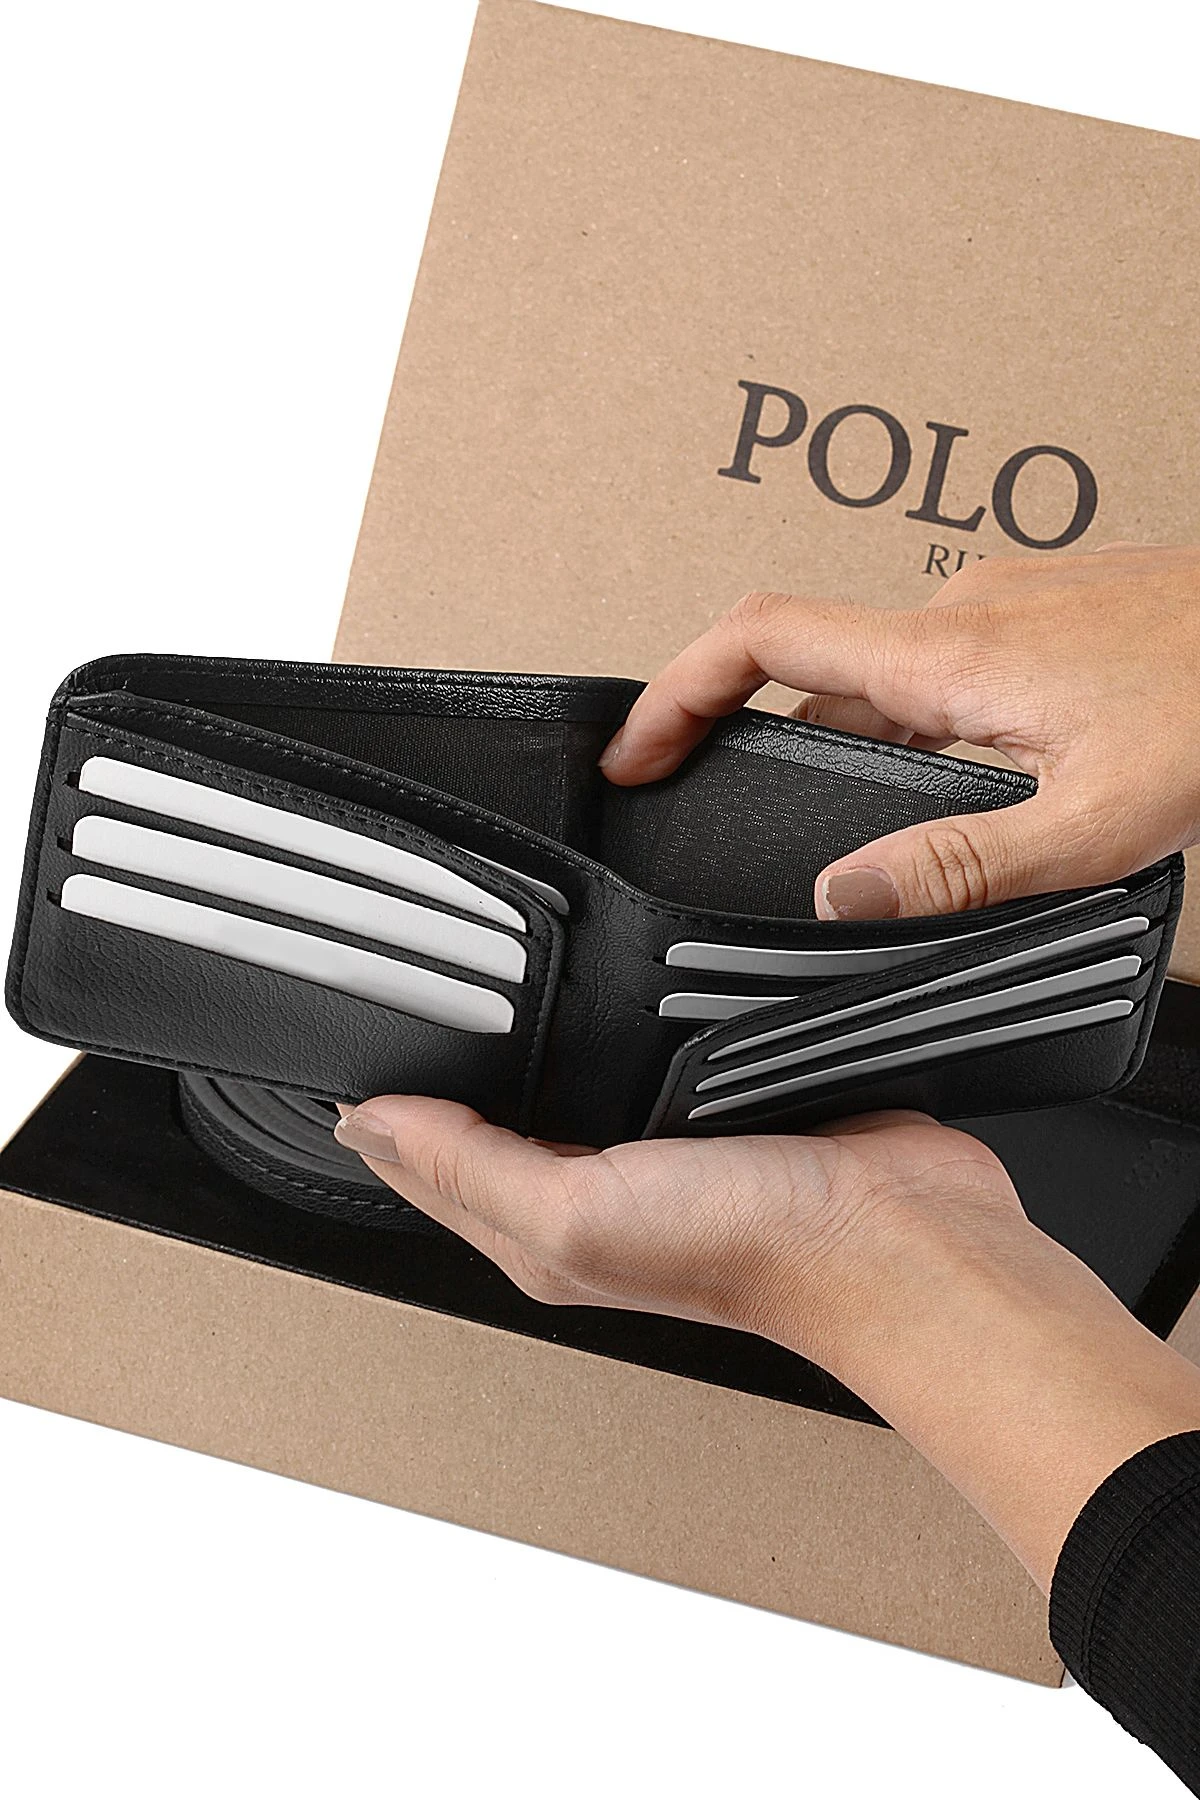 Polo Rucci Erkek Set Kombin Kol Saati Kemer Cüzdan Gümüş İçi Siyah Renk PL-0804E2